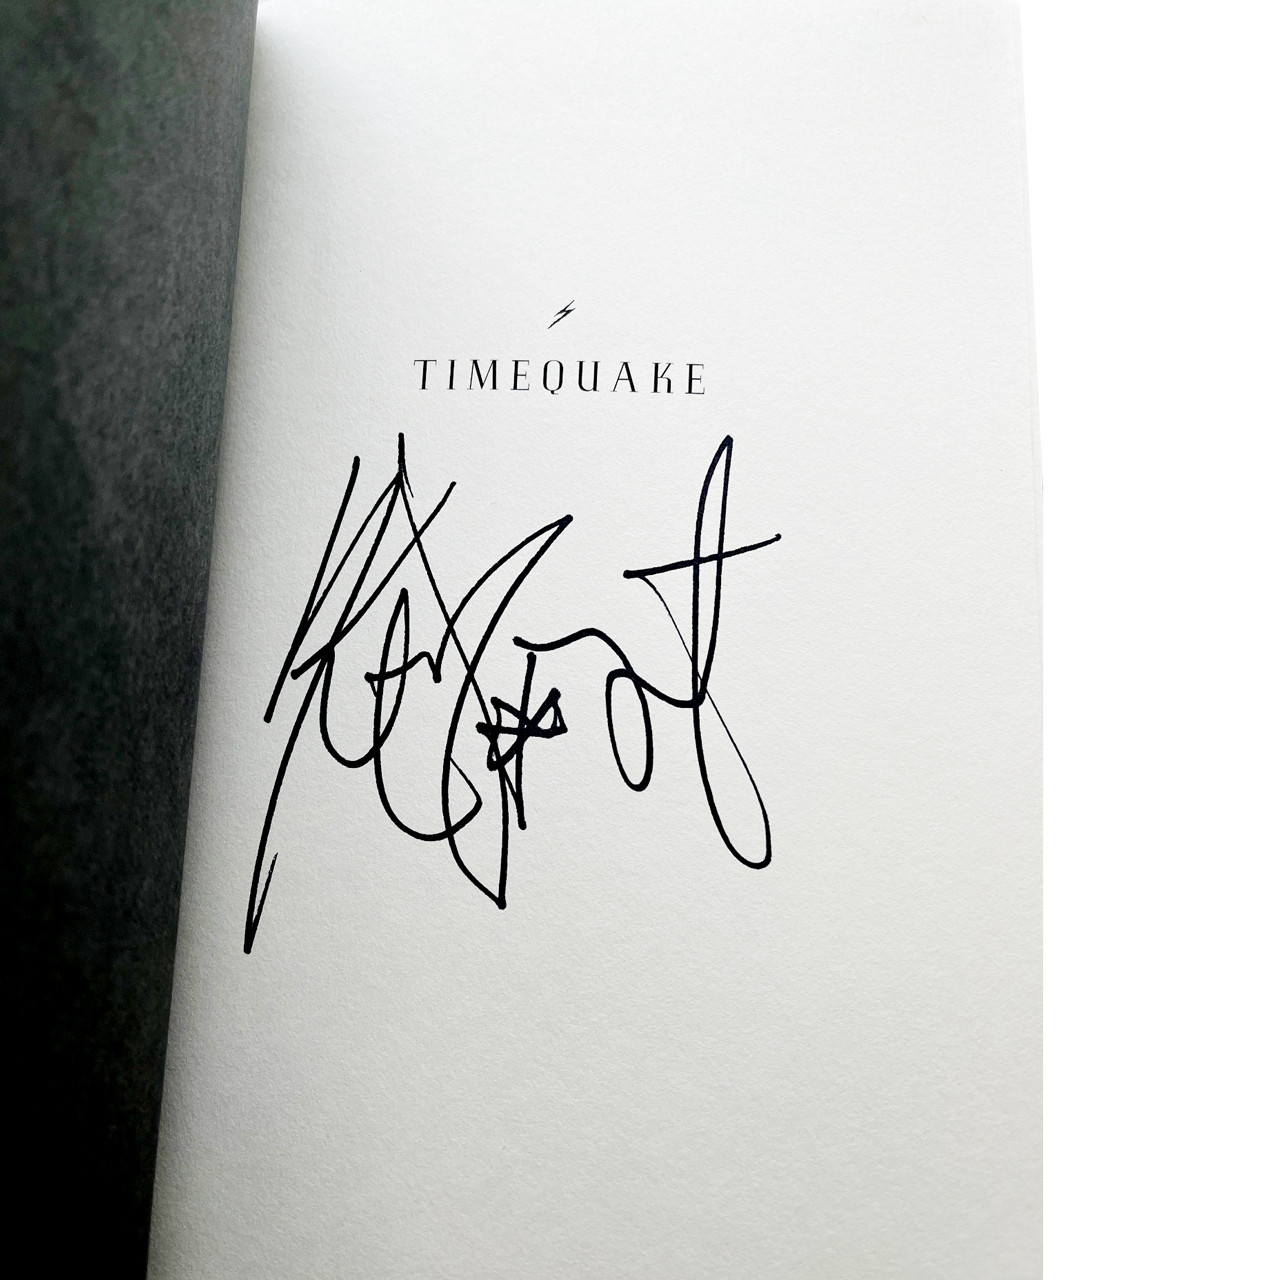 Kurt Vonnegut "Timequake" Signed First Edition, First Printing w/COA